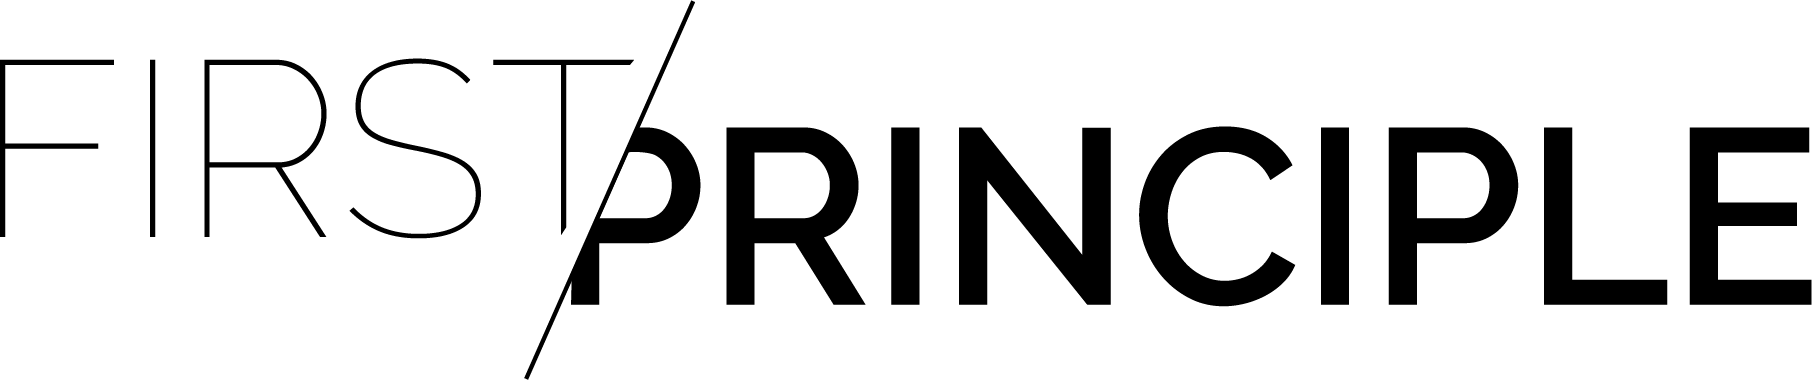 First Principle logo